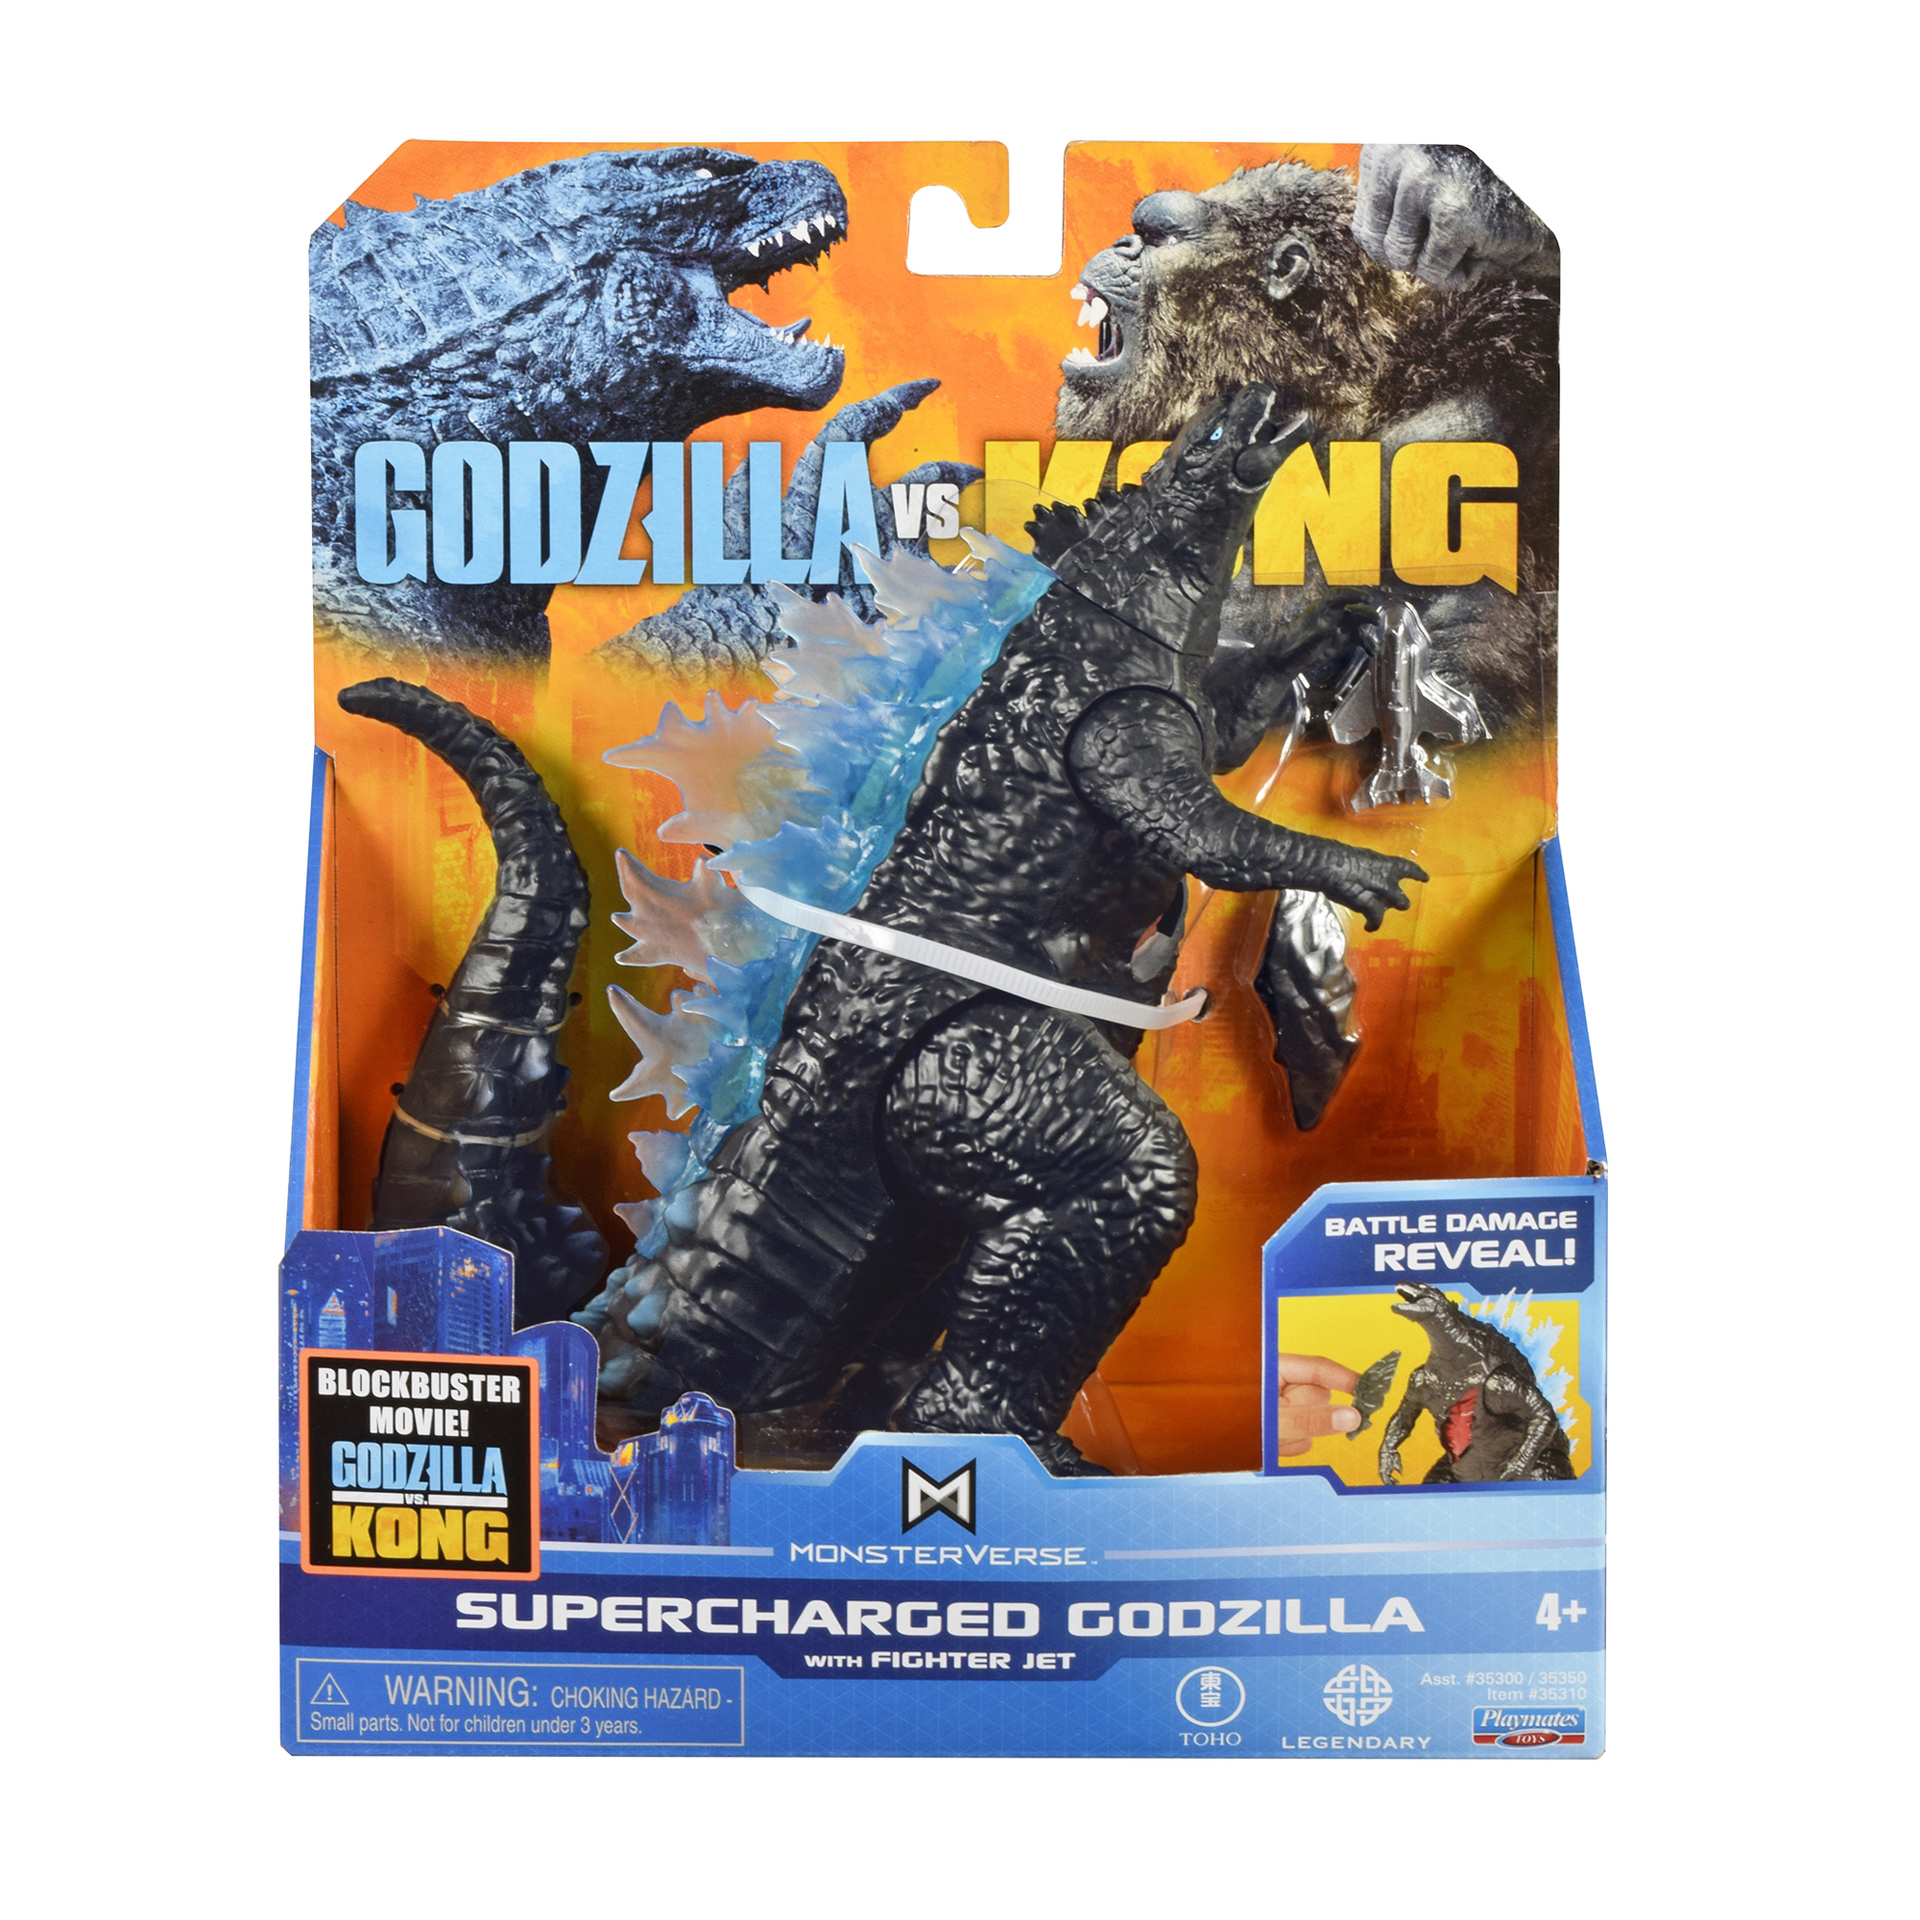 Godzilla: Planet of the Monsters Mega-Size Godzilla Action Figure